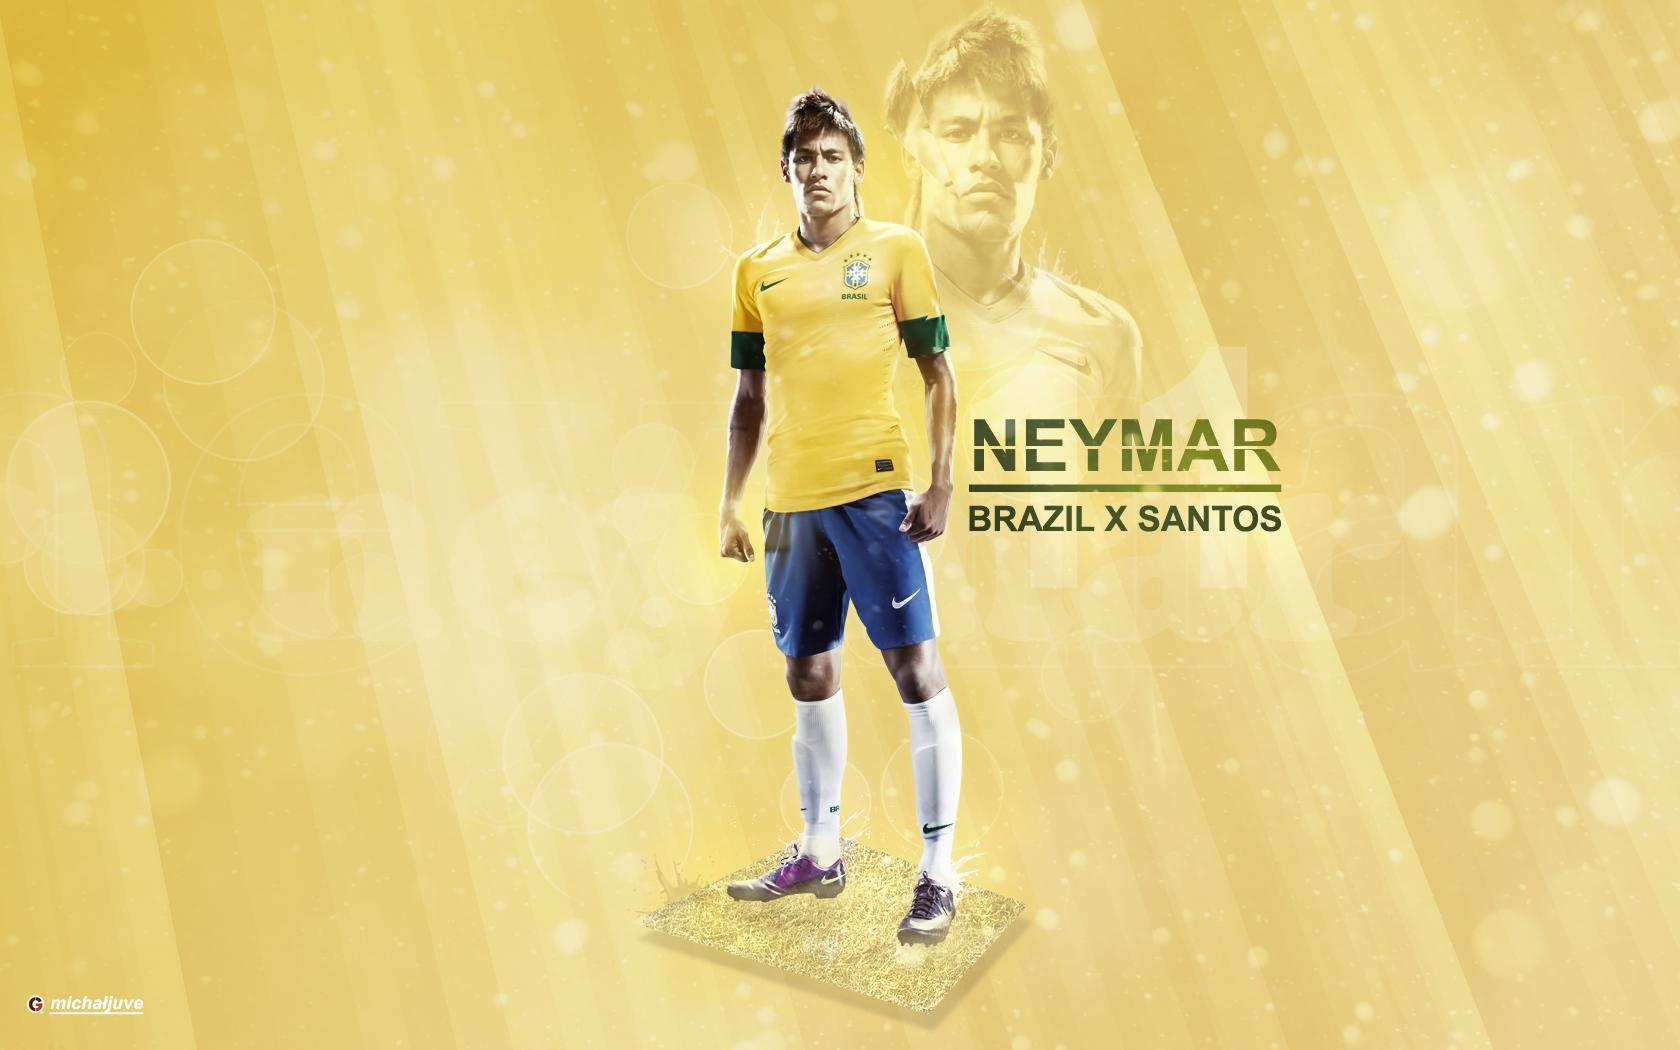 Wallpaper Neymar Dos Santos · Neymar Wallpaper. Best Desktop